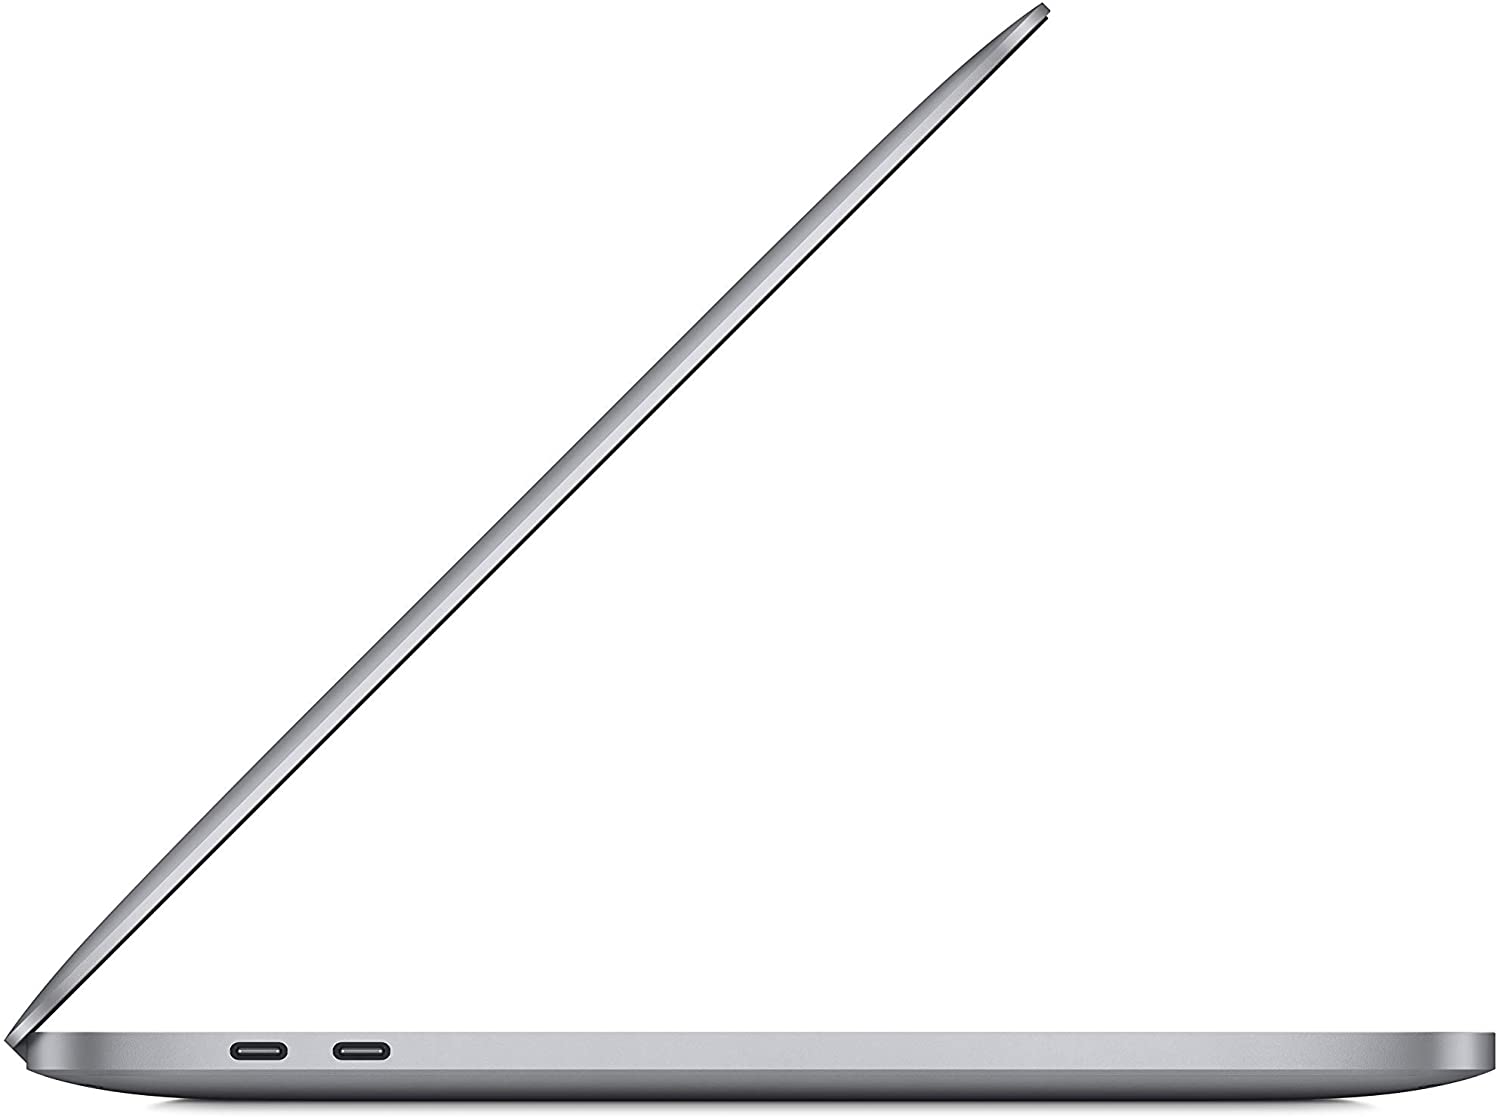 MacBook Pro With TouchBar Featured